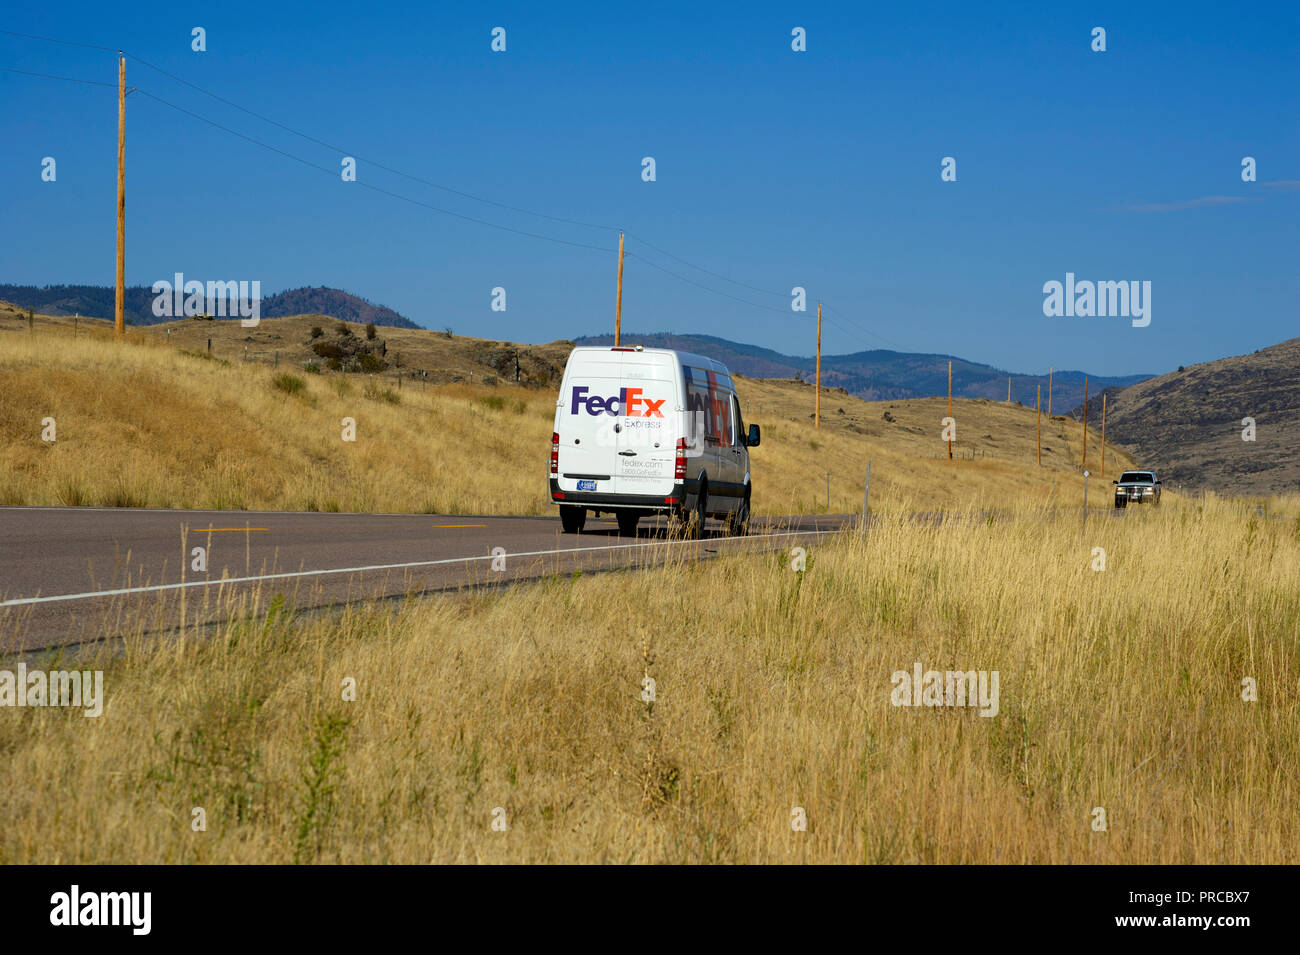 Consegna FedEx carrello su strada remota nel Montana, USA Foto Stock